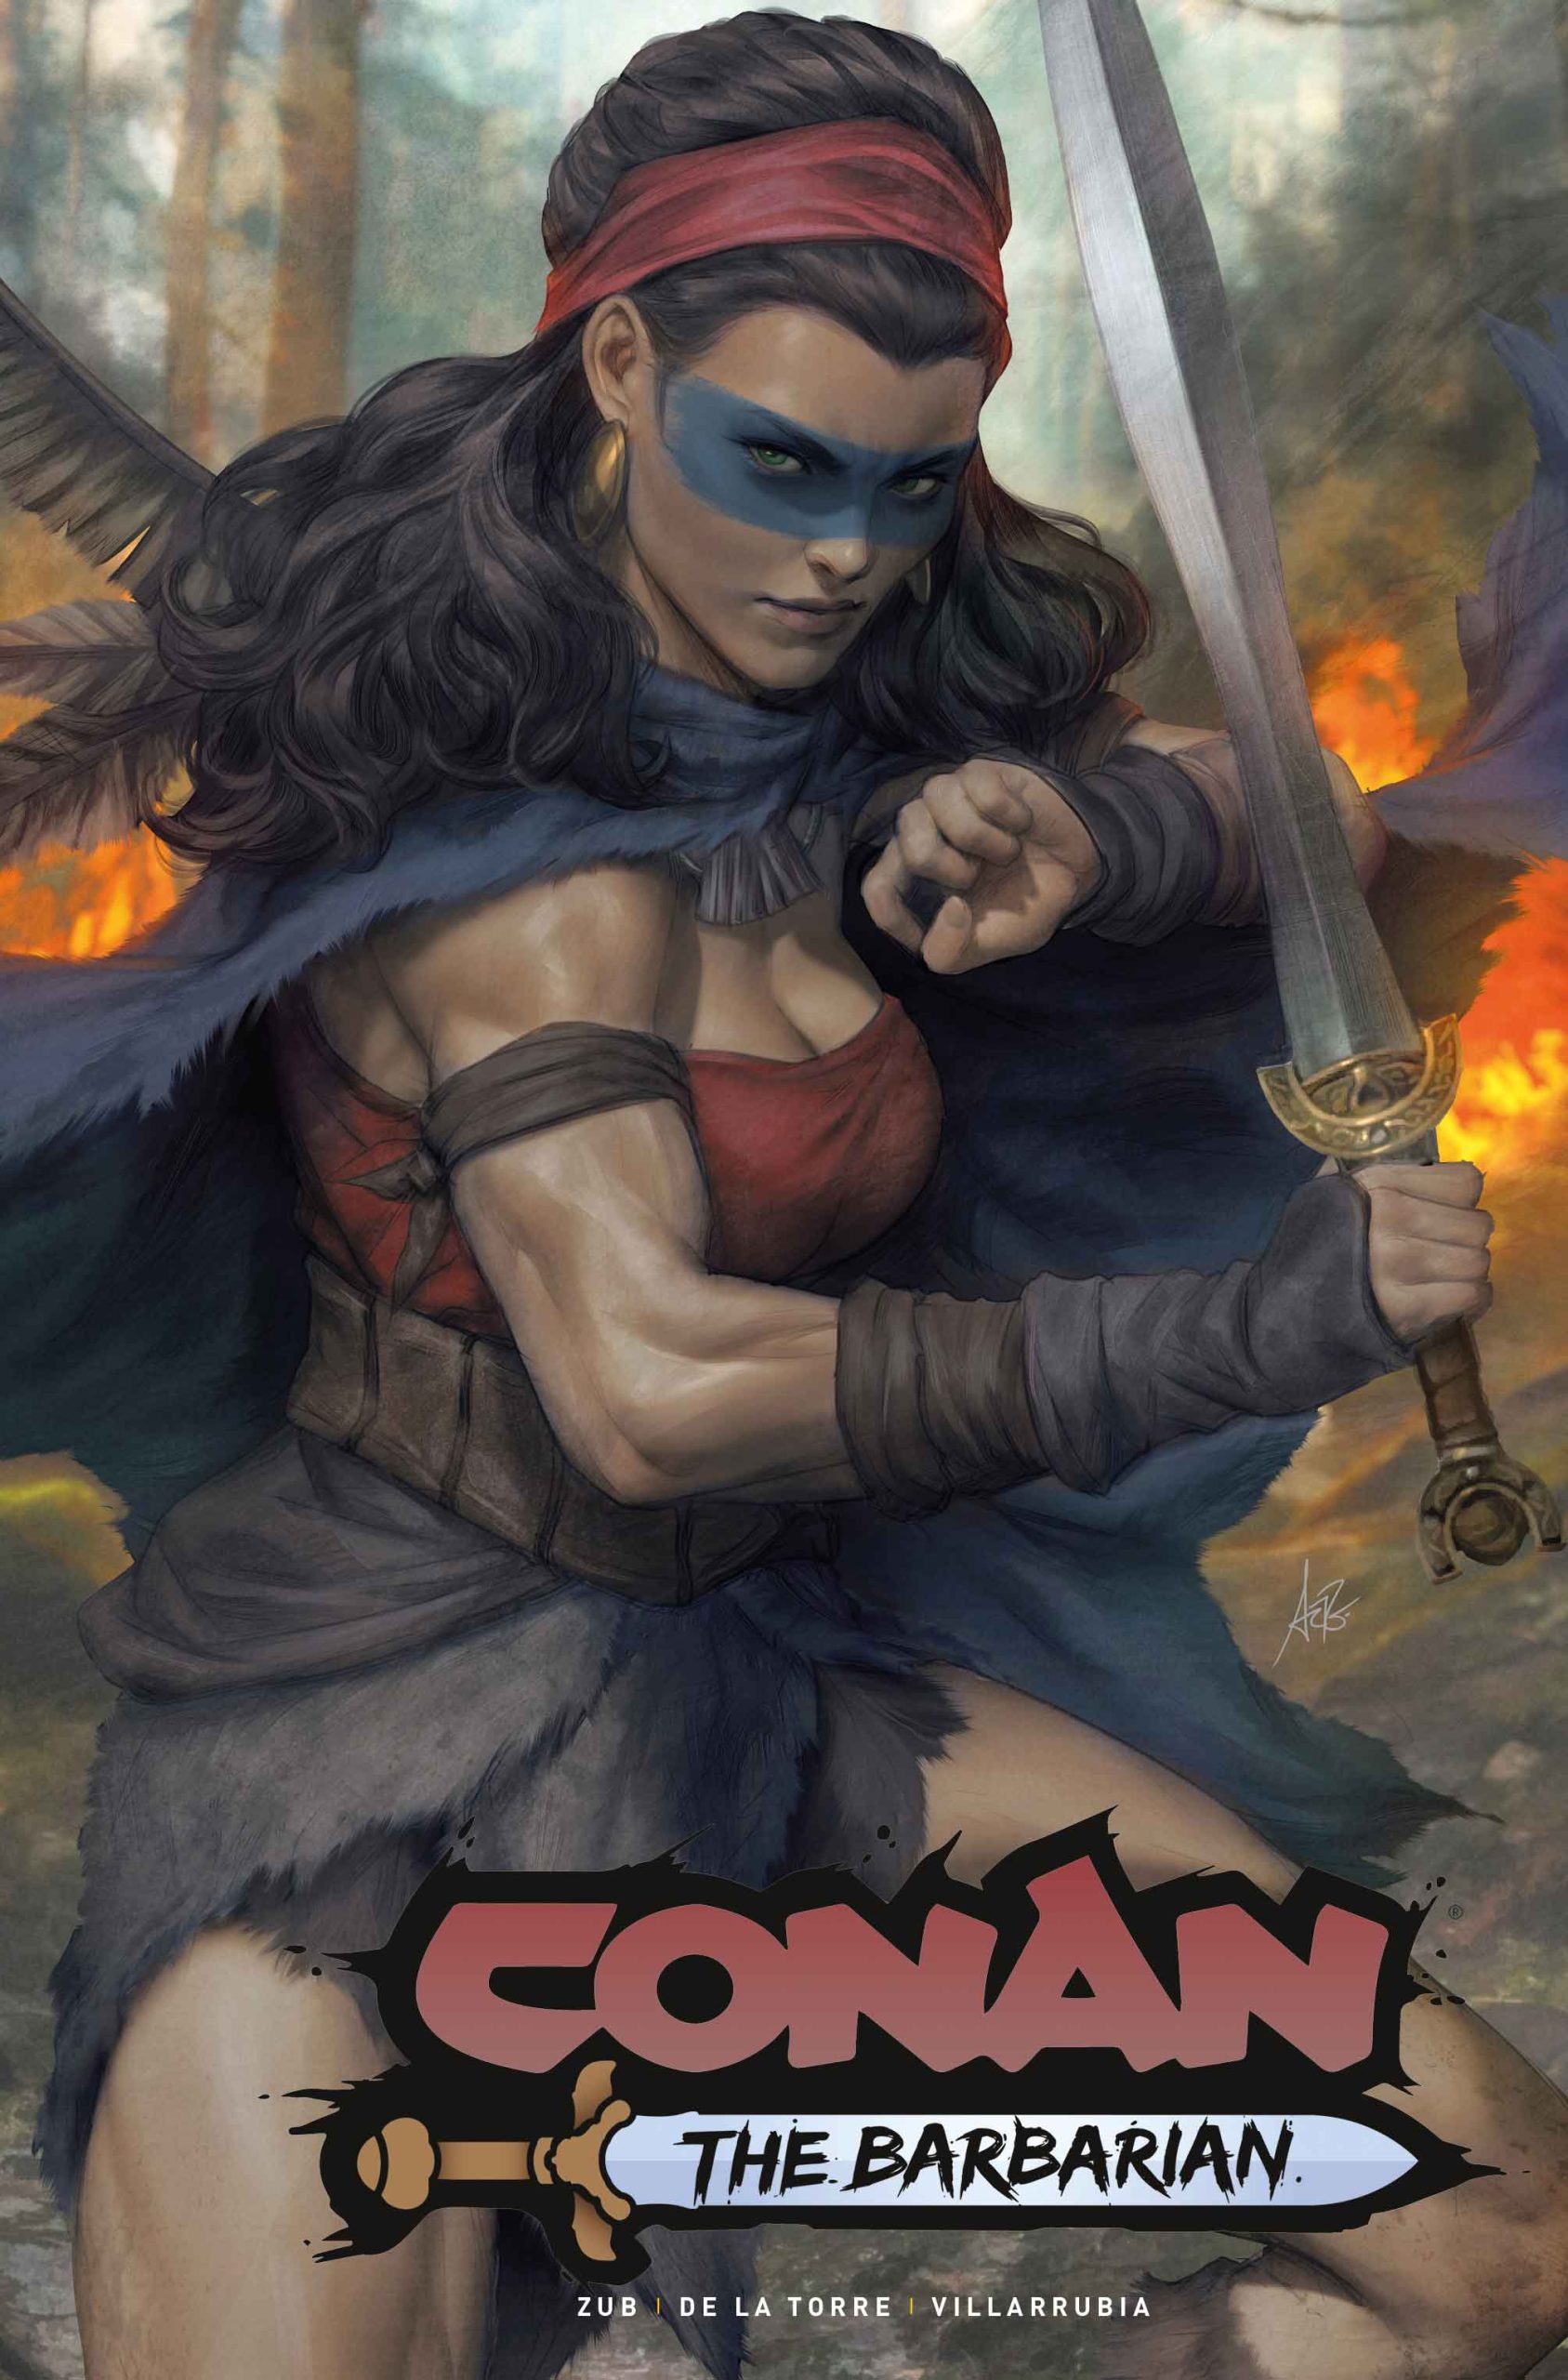 Conan the Barbarian #1 by Artgerm